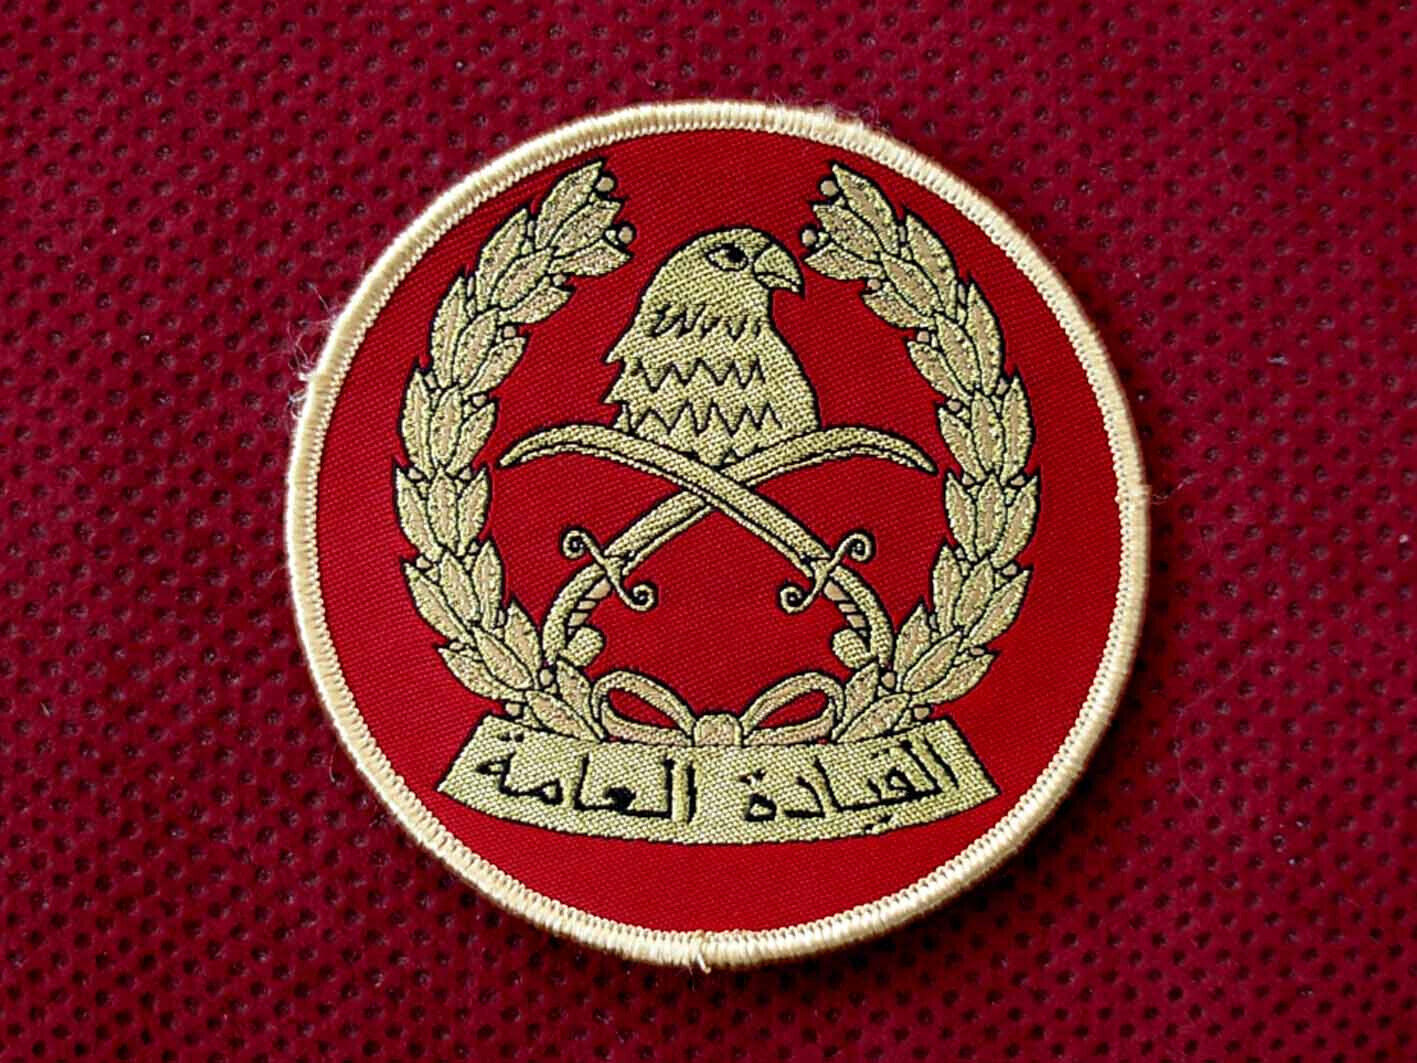 TUNIS - TUNISIAN ARMY - TUNISIAN CENTRAL COMMAND PATCH - RRR